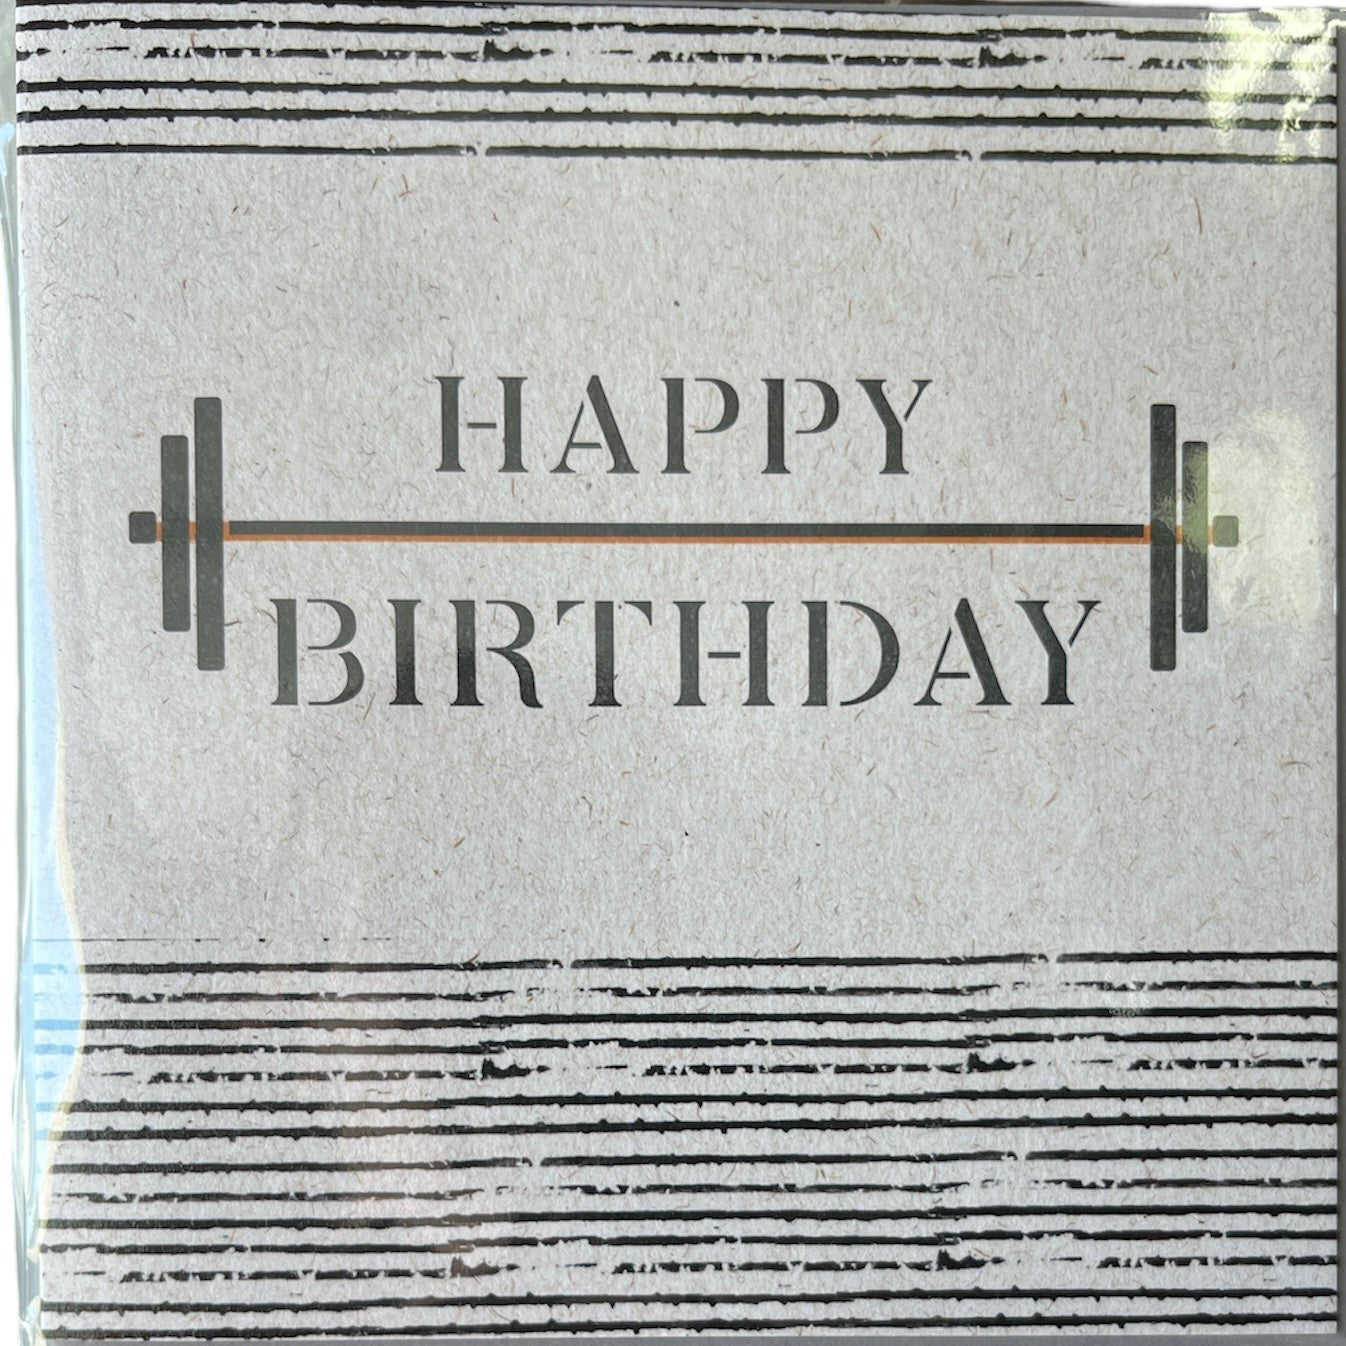 Birthday Weights - Greeting Card - Birthday